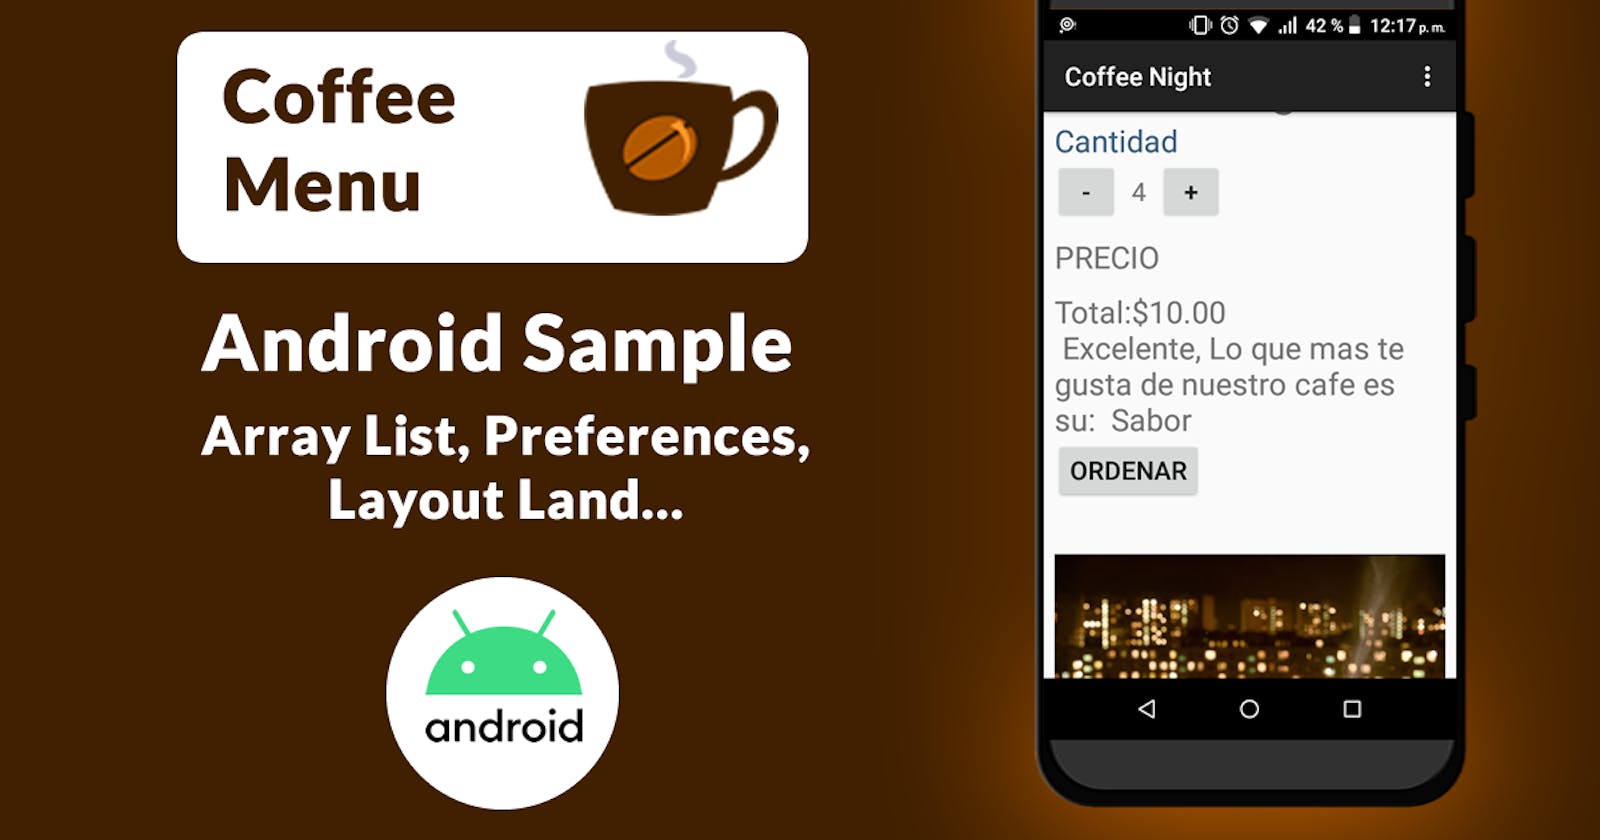 Coffee Menu - Android Sample